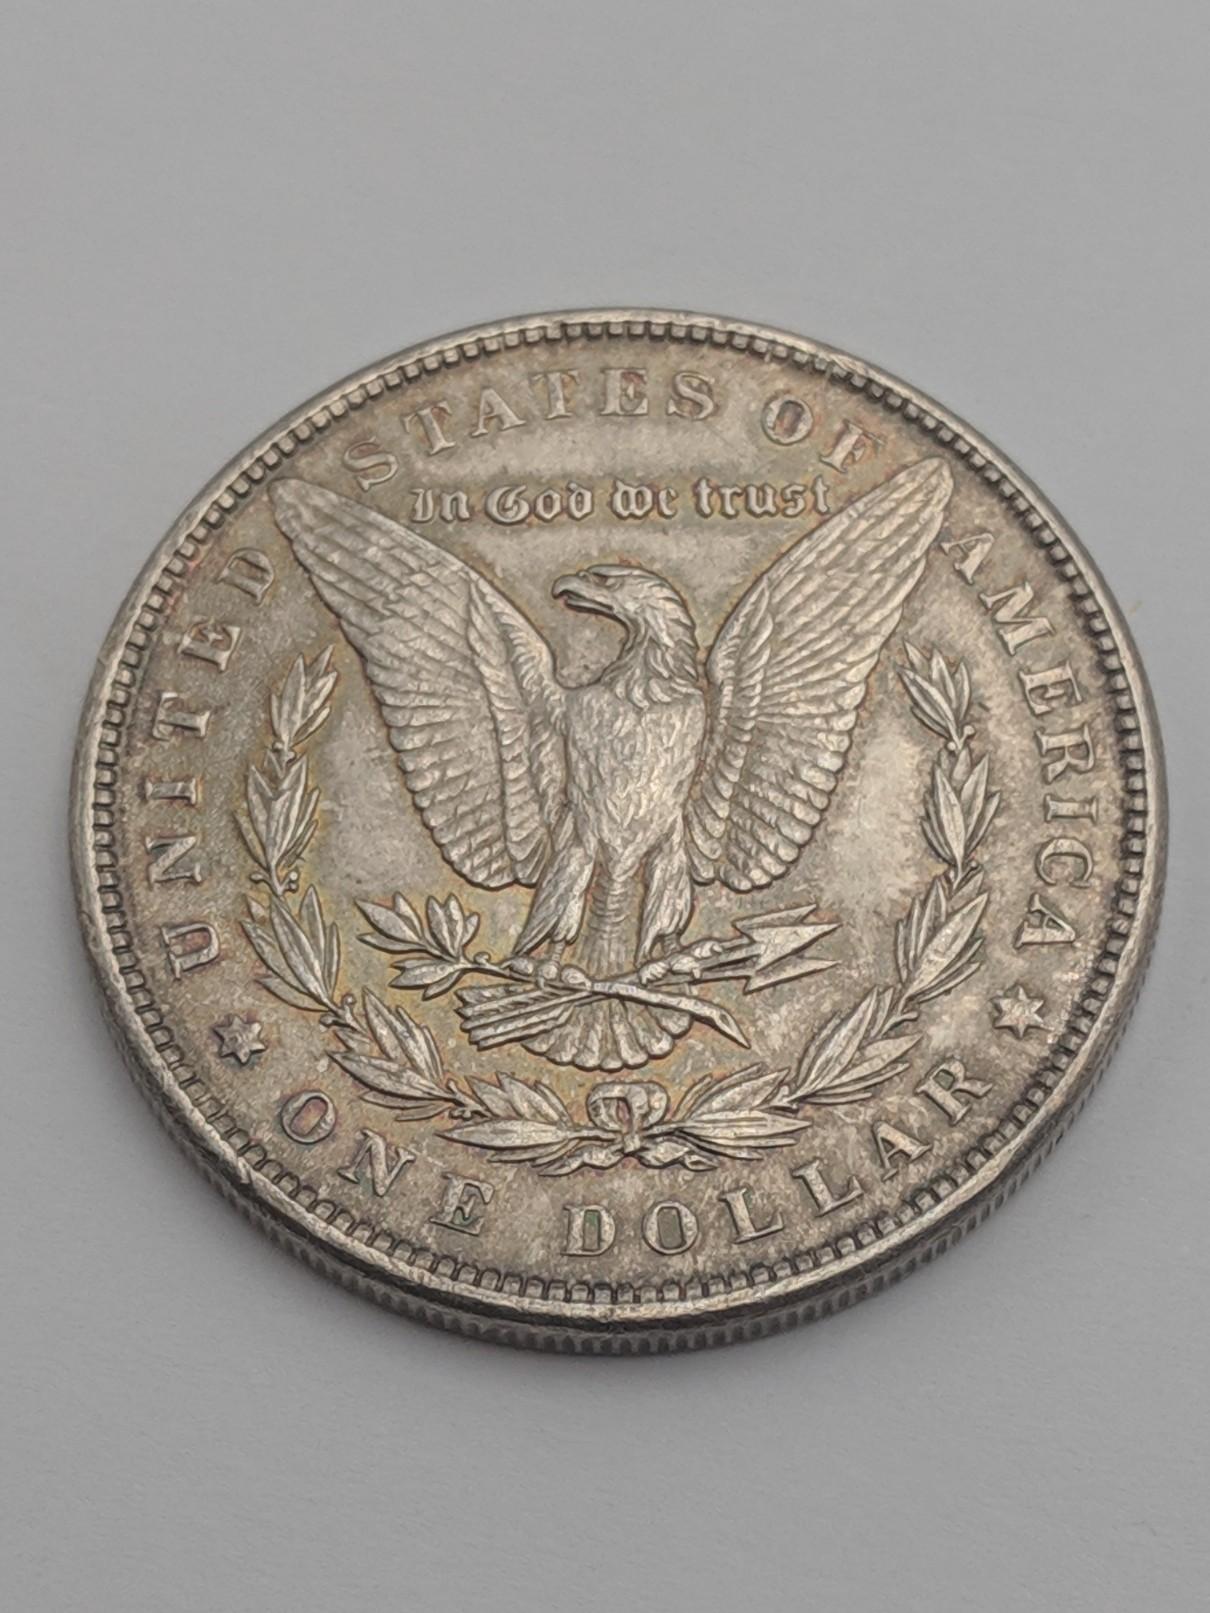 1889 Morgan $1